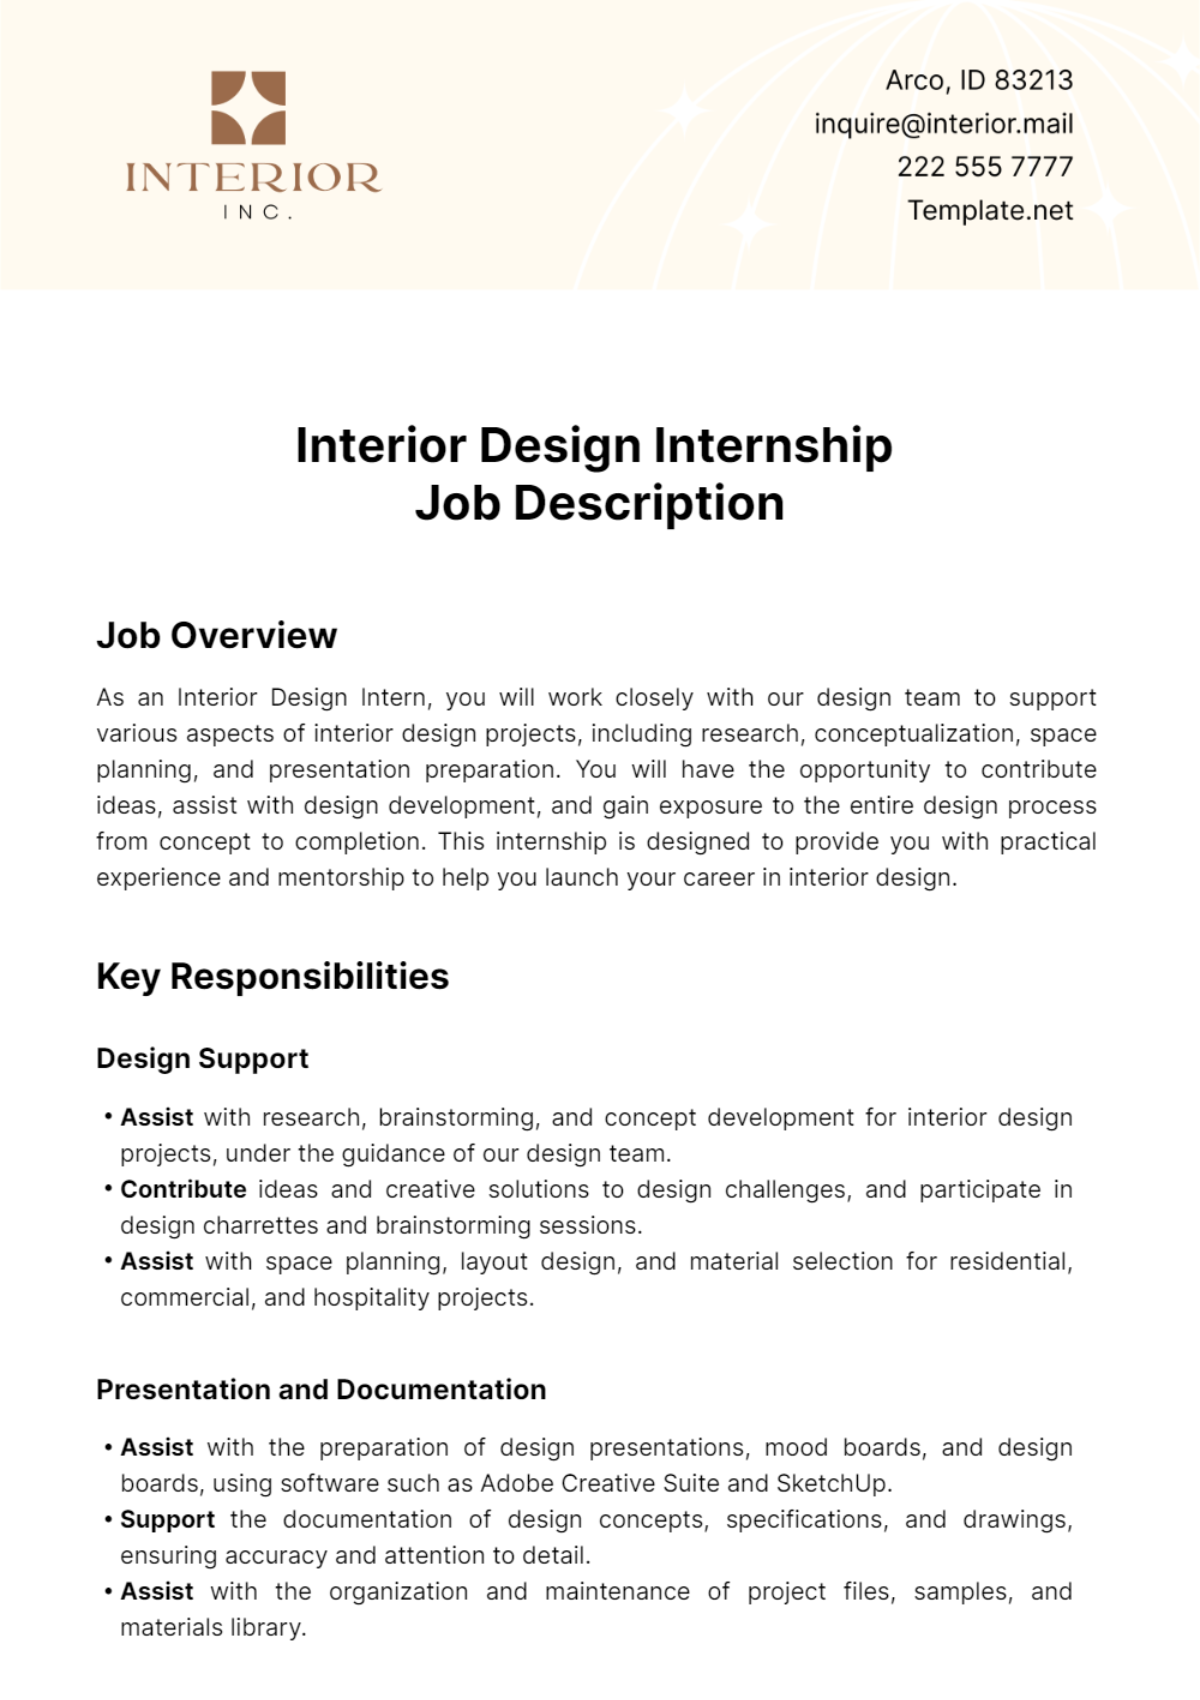 Interior Design Internship Job Description Template